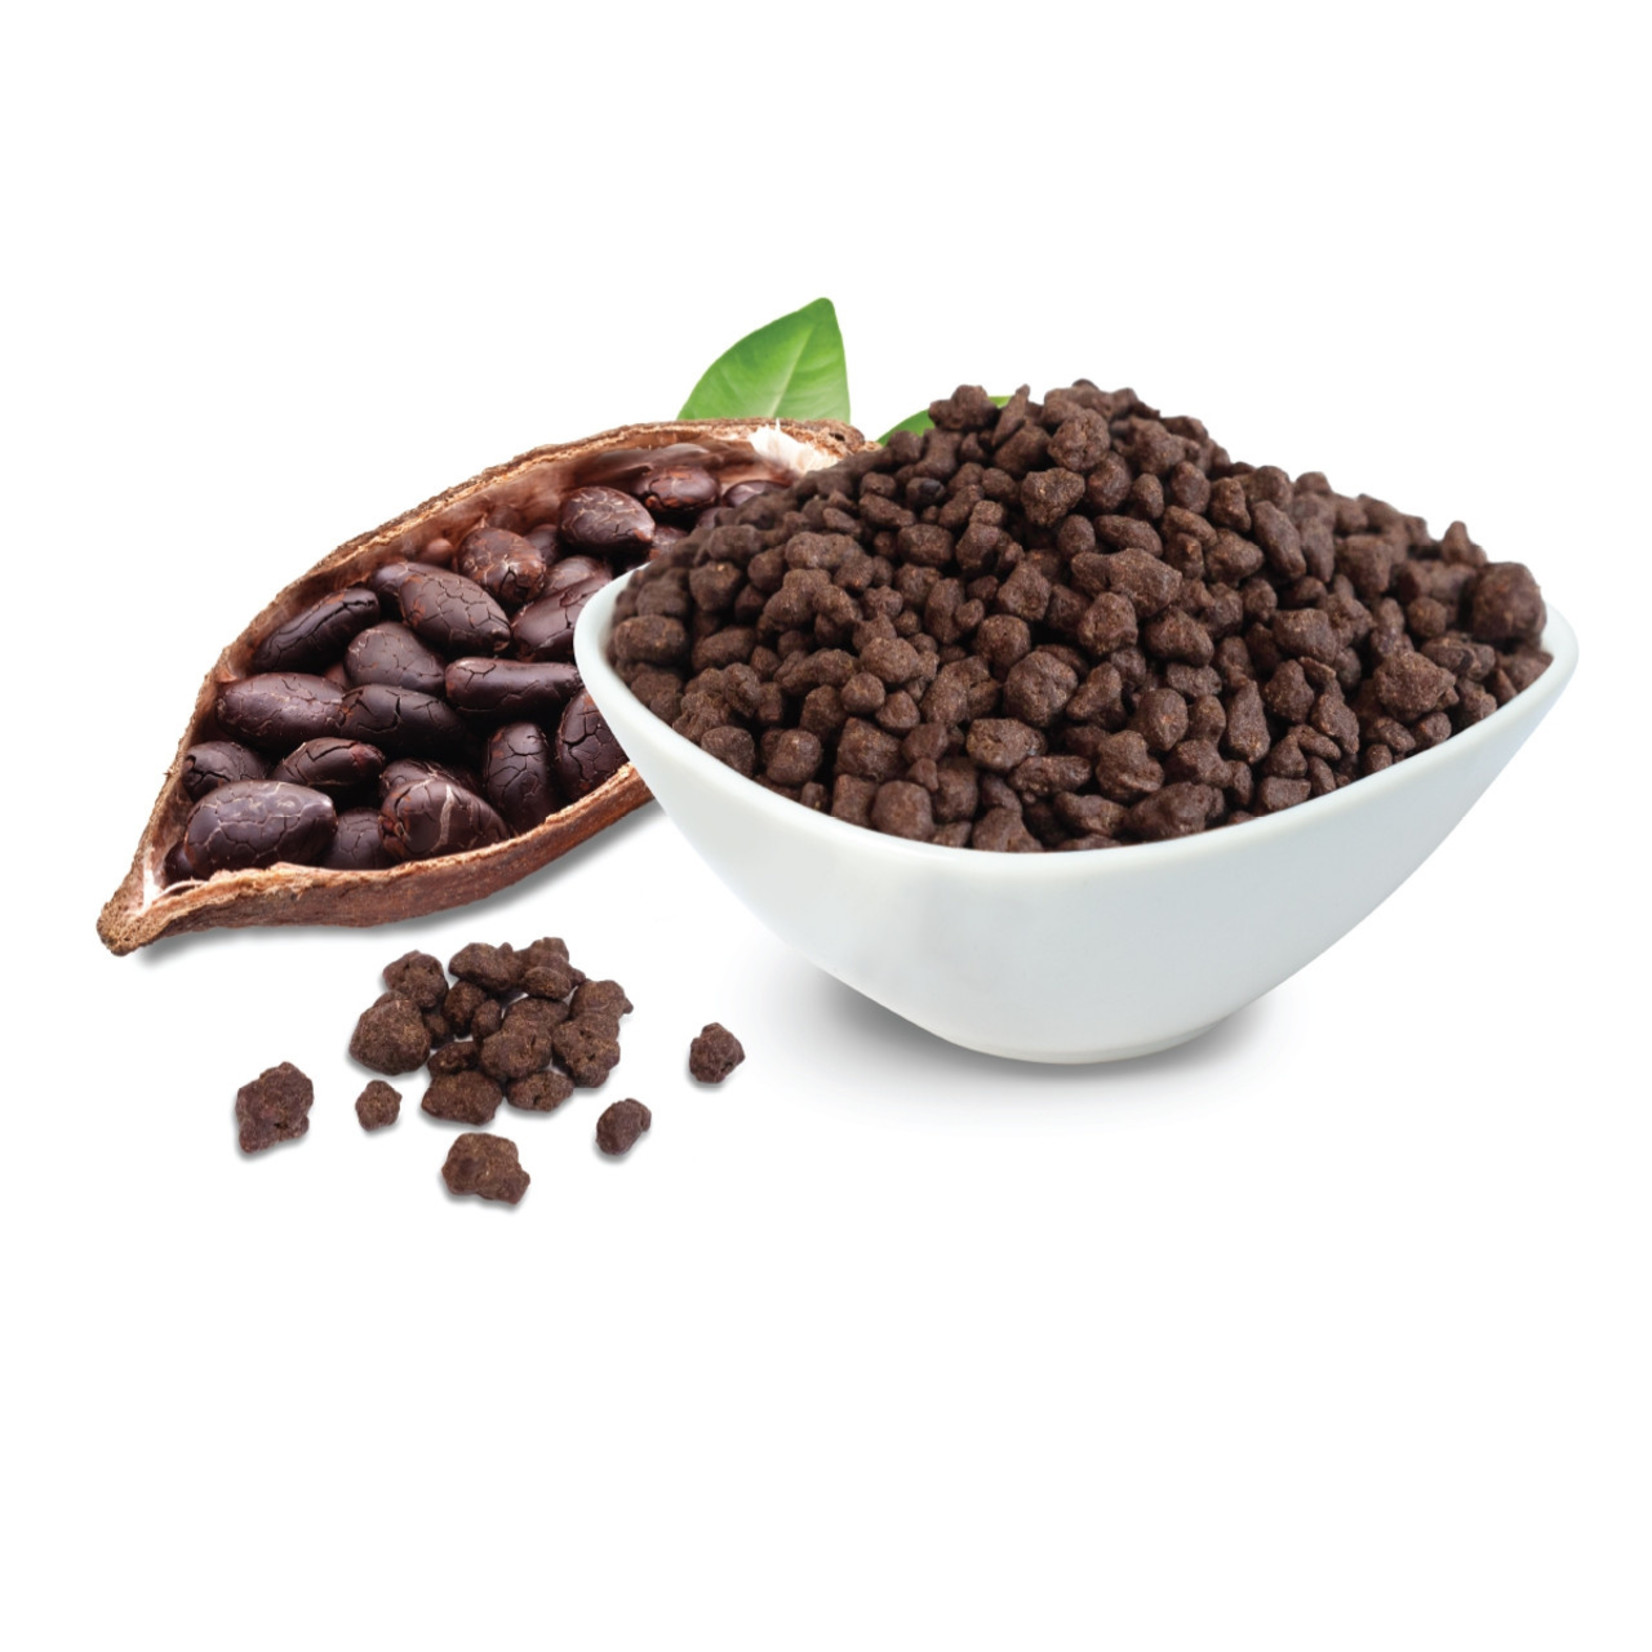 Sunfood Sunfood - Organic Sweet Cacao Nibs - 4 oz